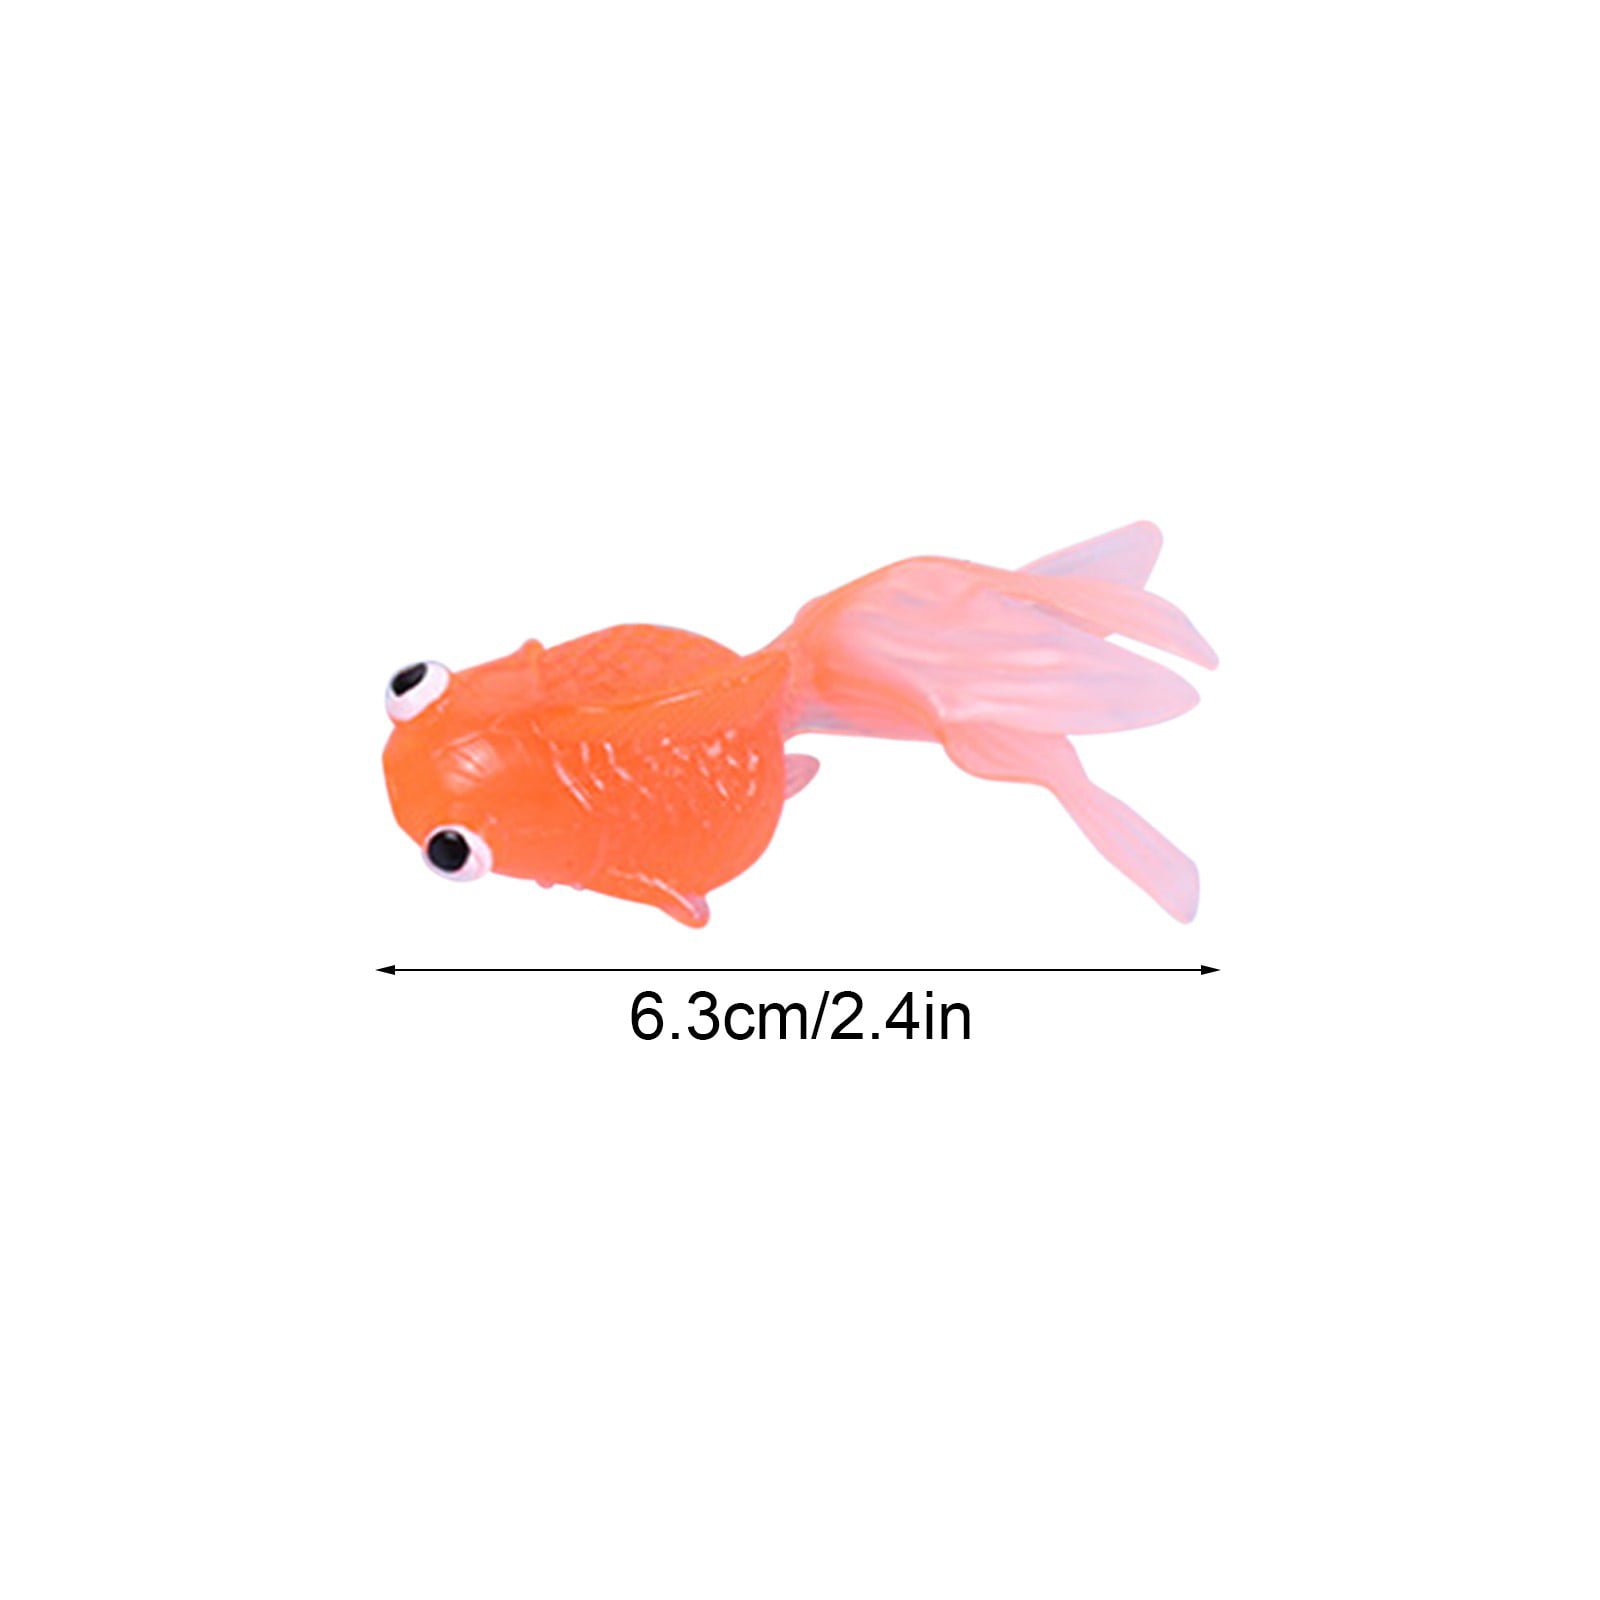  Plastic Vinyl Goldfish - 144 Pcs, 2 Inches Long Gold